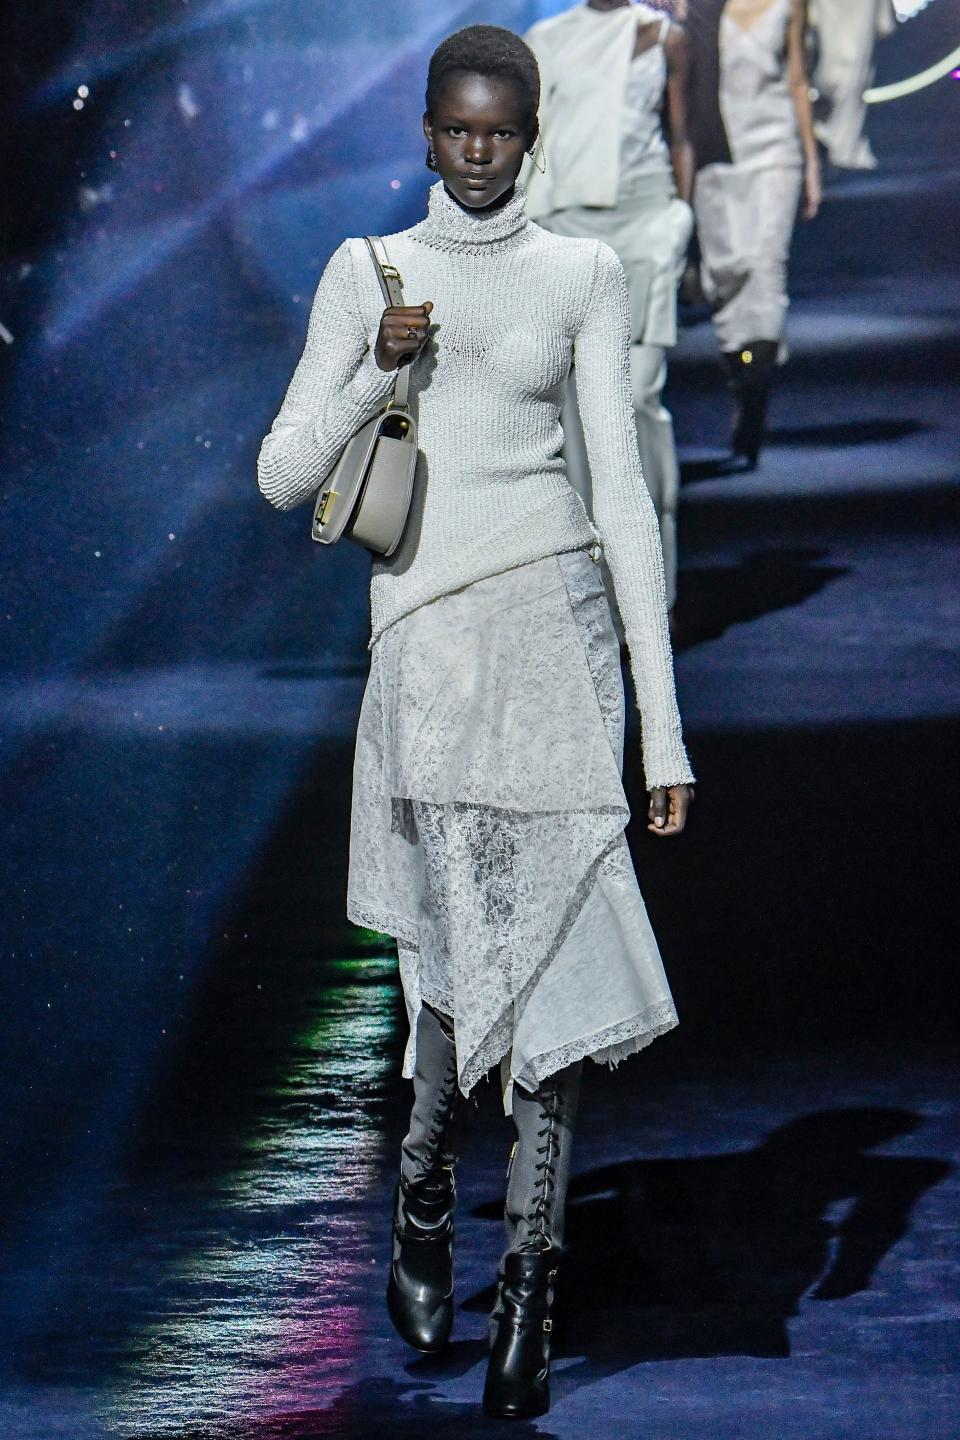 A model walks the Fendi runway during Milan Fashion Week.